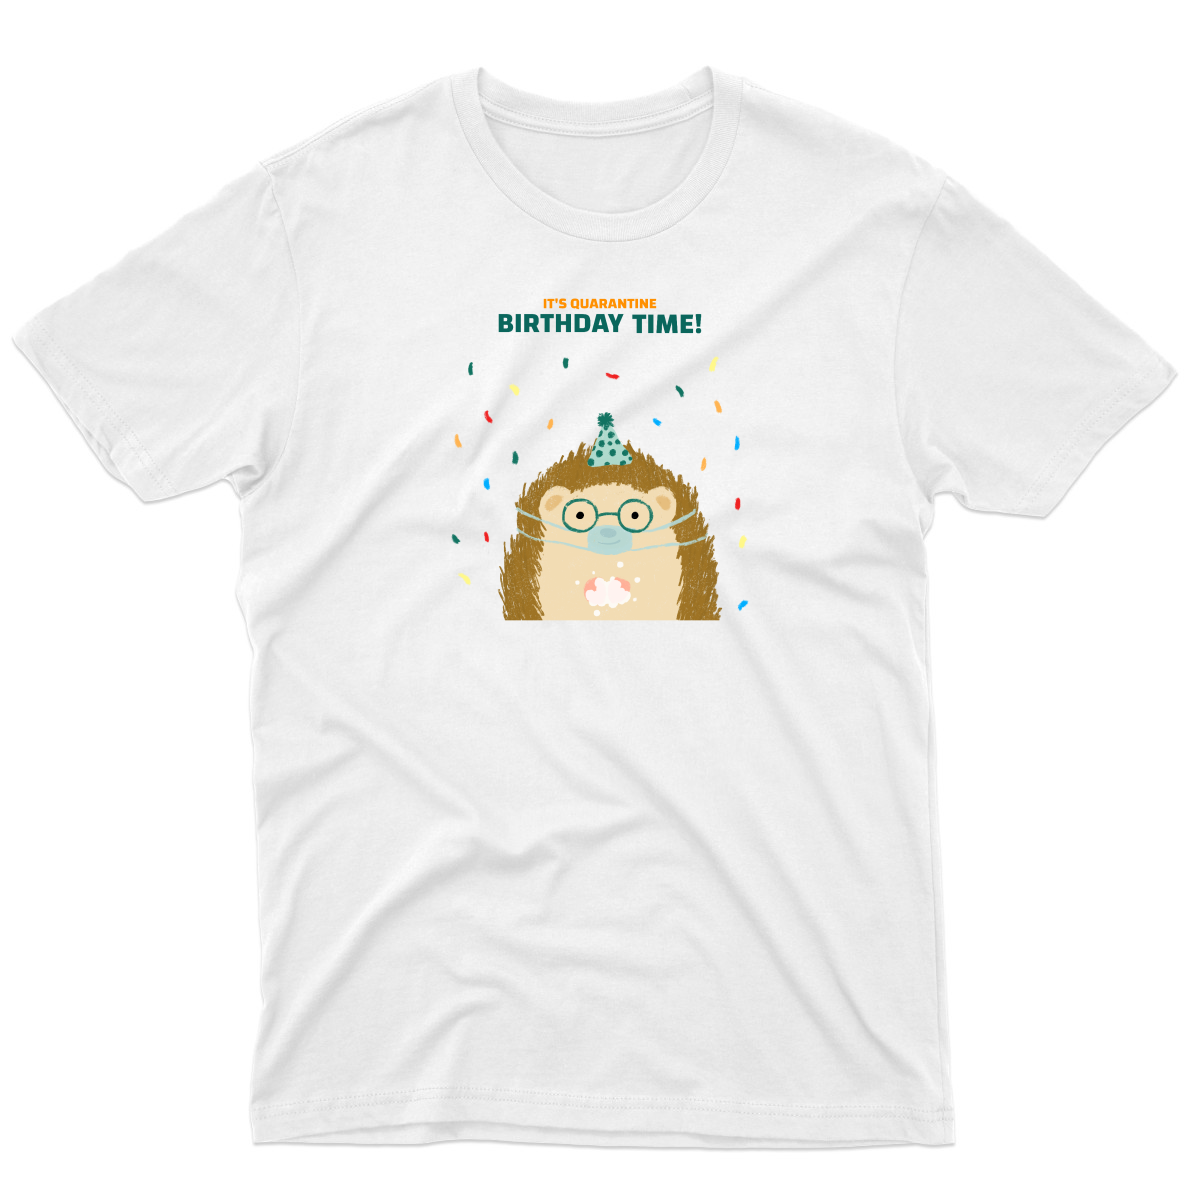 It is quarantine birthday time Men's T-shirt | White